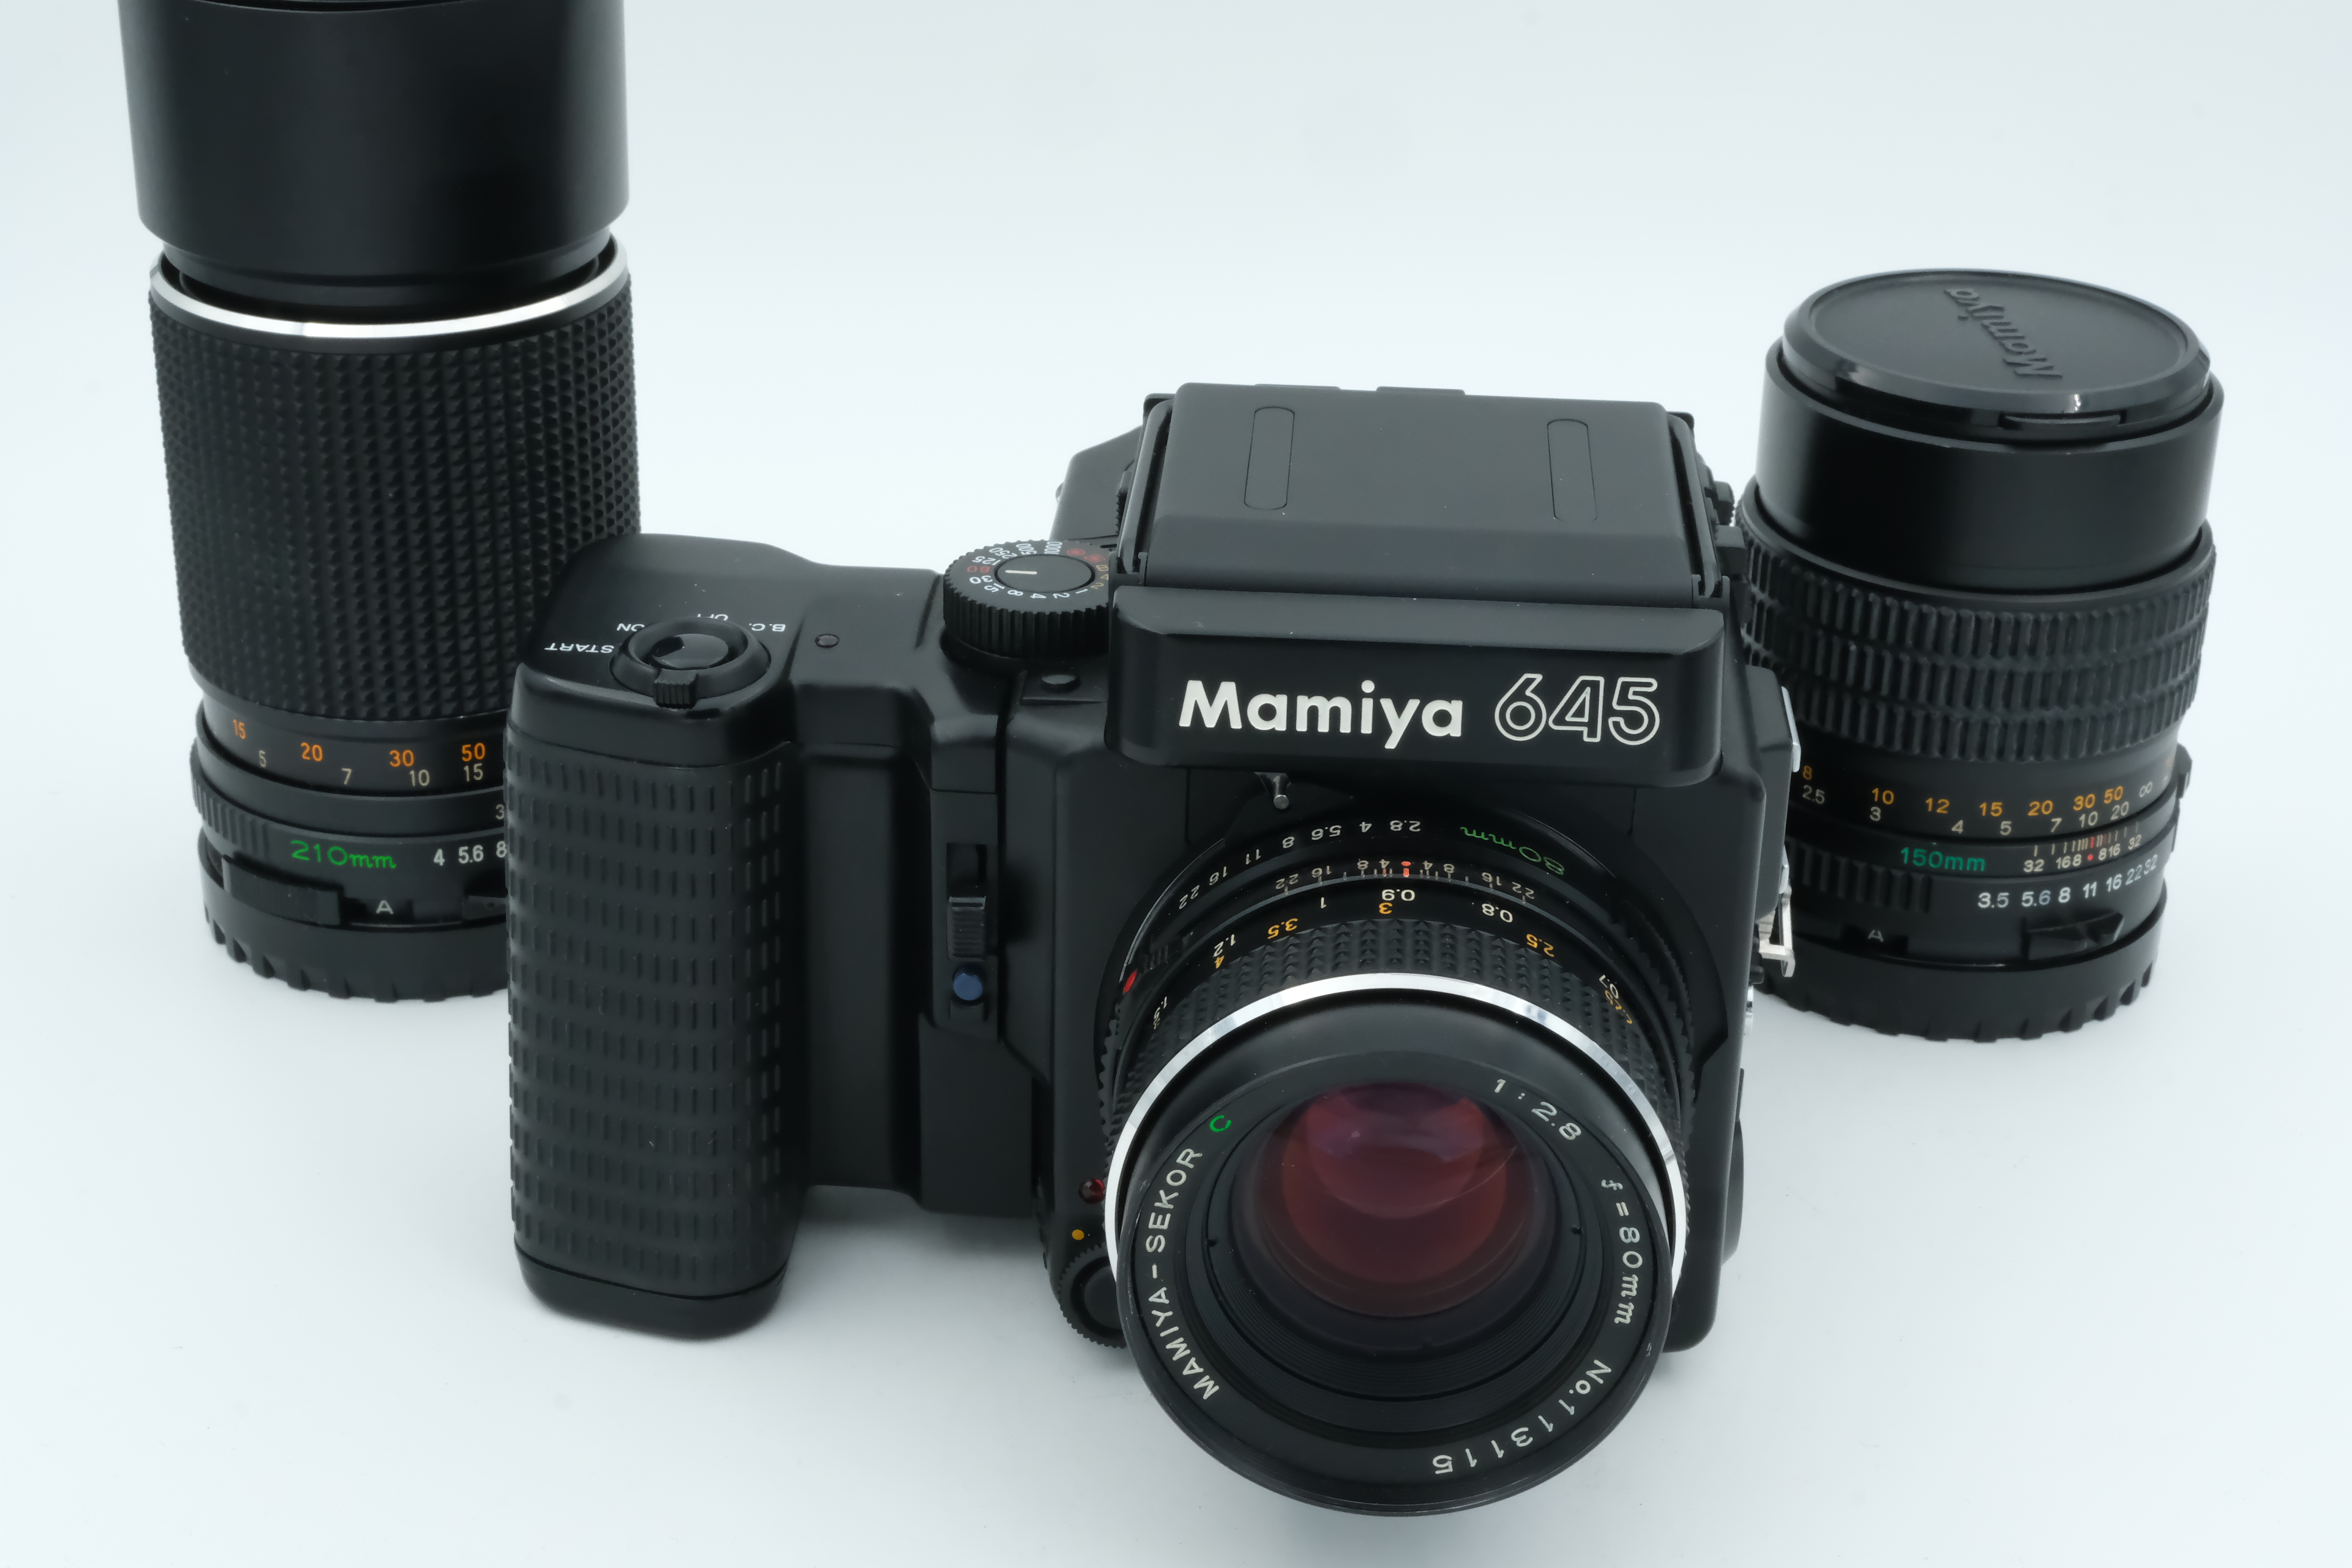 Mamiya 645 + 80mm 2,8 + 150mm 3,5 + 210mm 4,0 3x Magatine 4,5x6 + 1x Magazin 135mm + Griff + Kurbel + AE Prisma